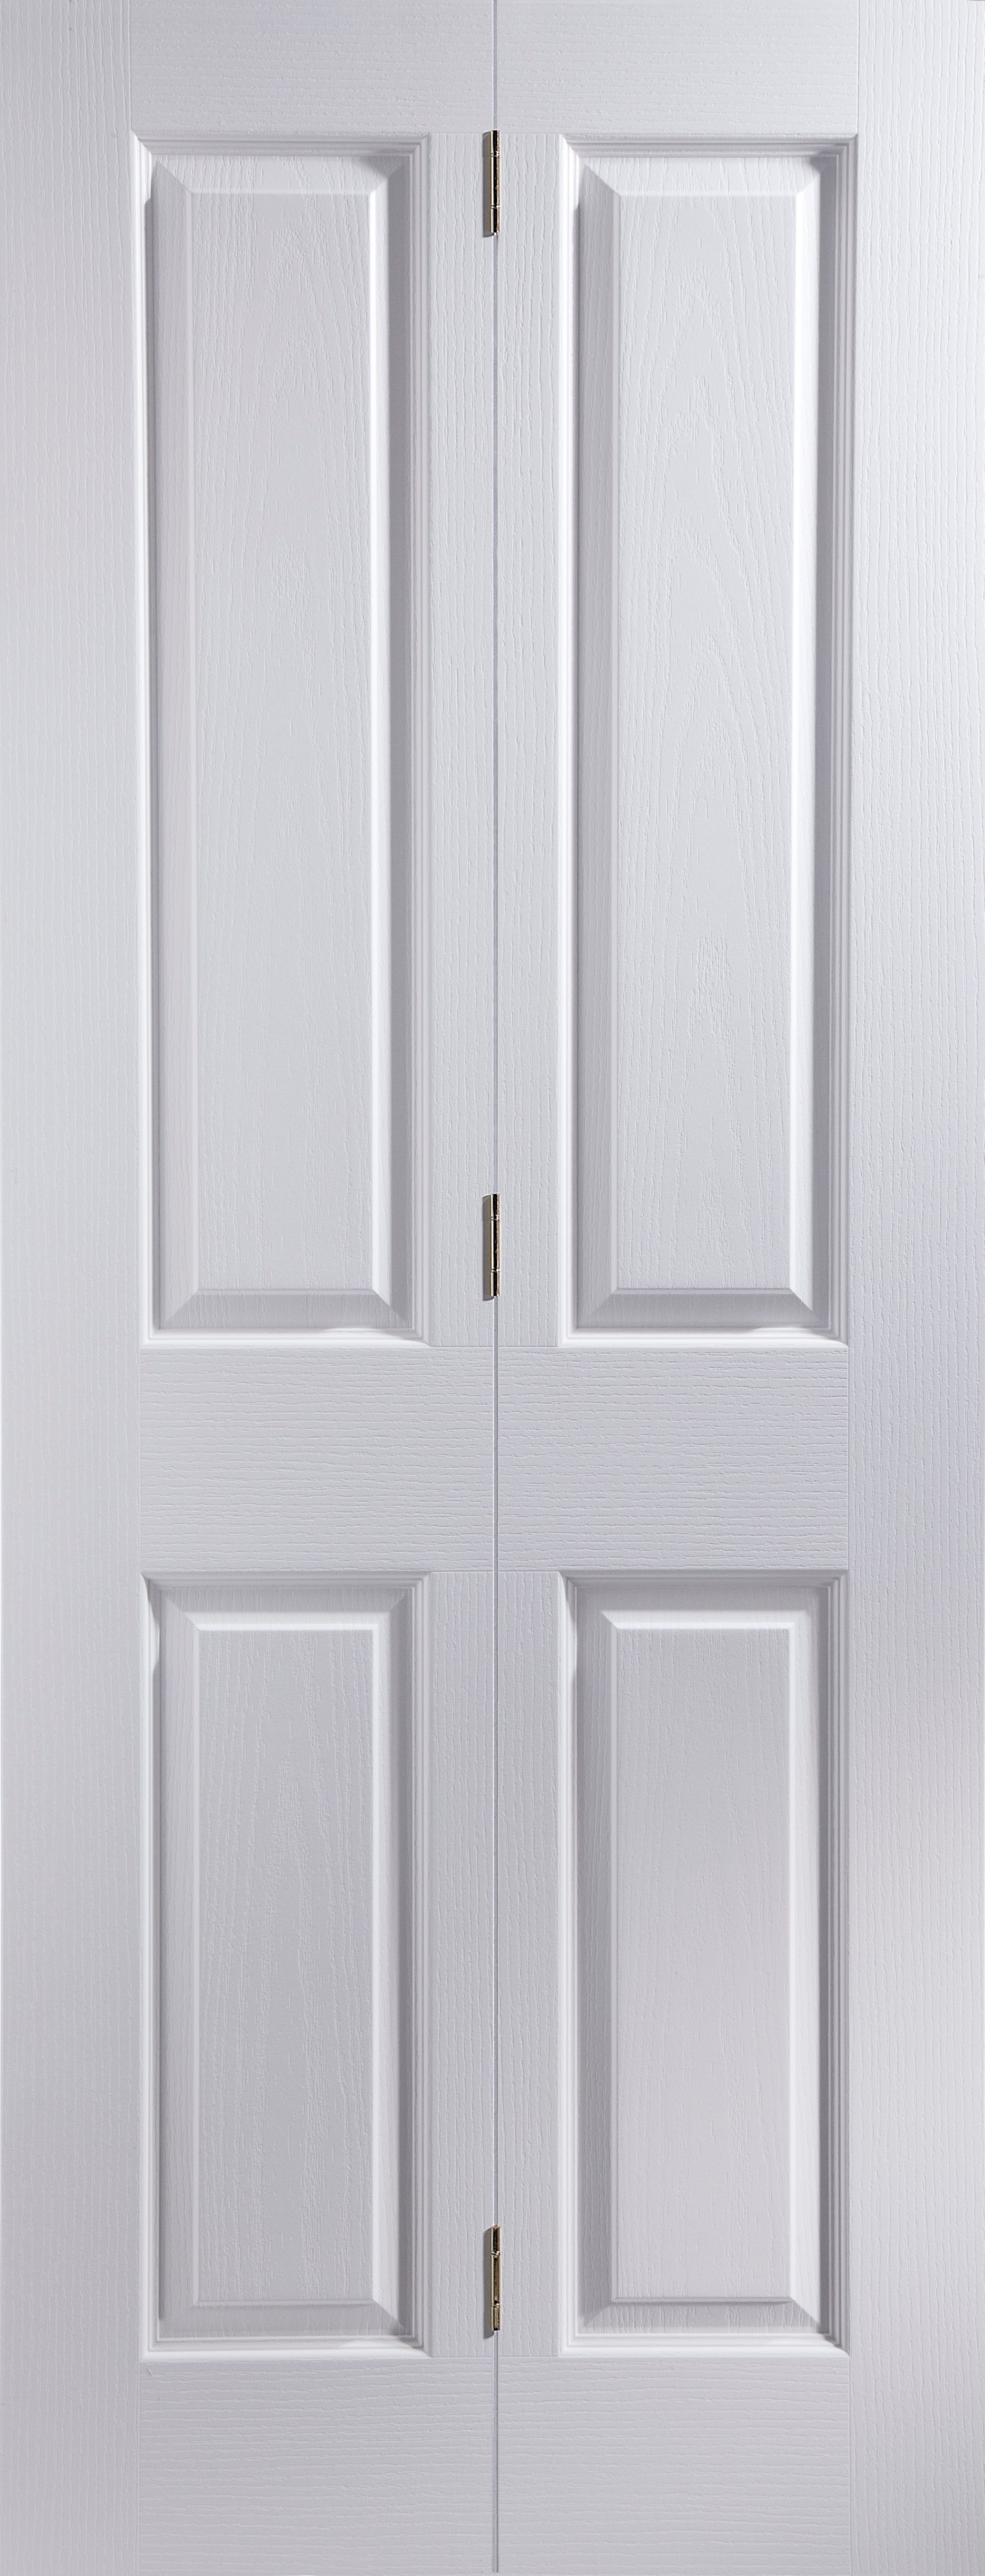 Victorian 4 panel Unglazed Contemporary White Woodgrain effect Internal Bi-fold Door set, (H)1950mm (W)750mm